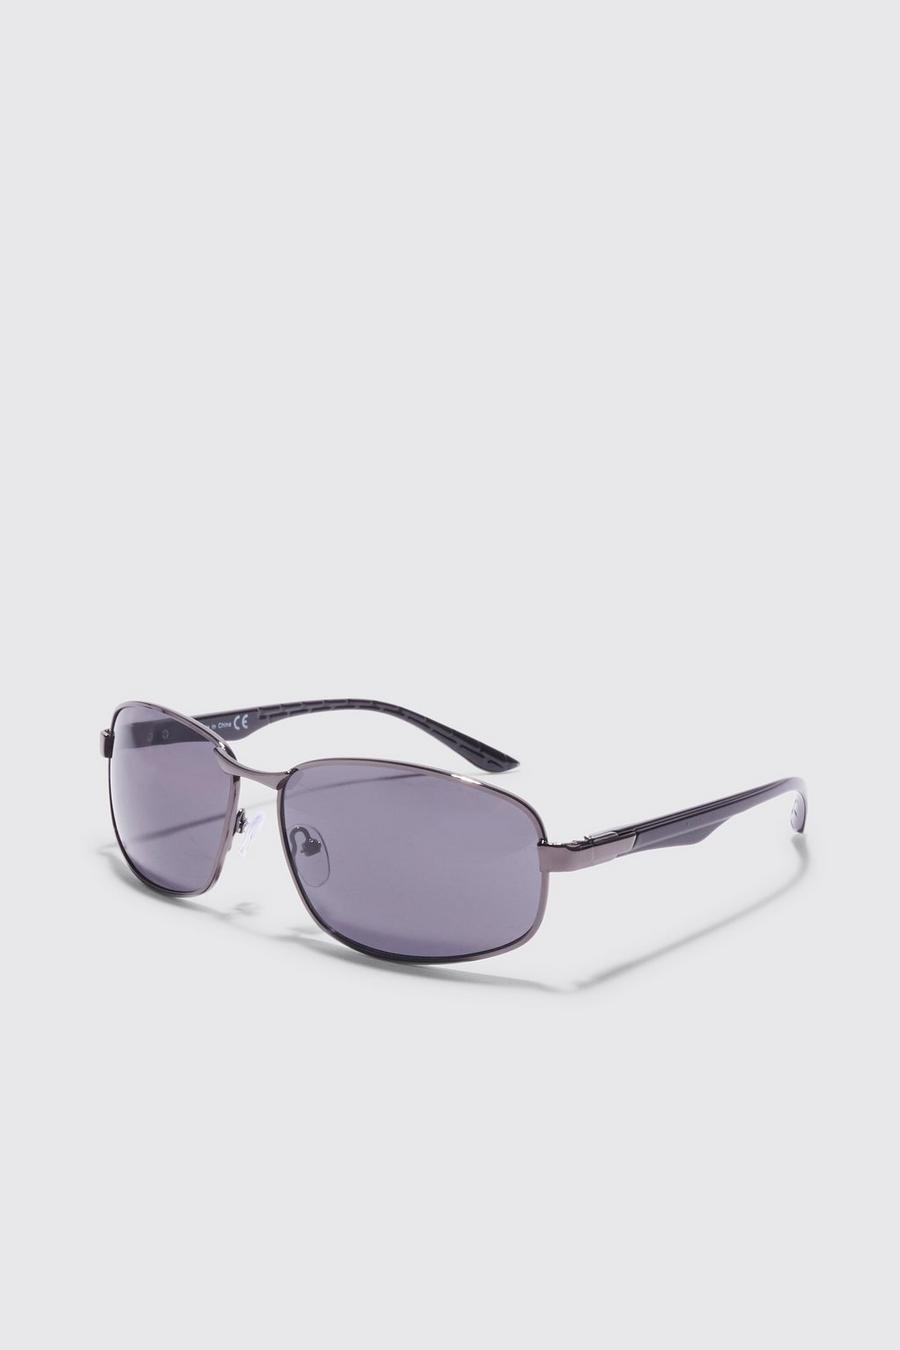 Charcoal grigio Angled Sunglasses